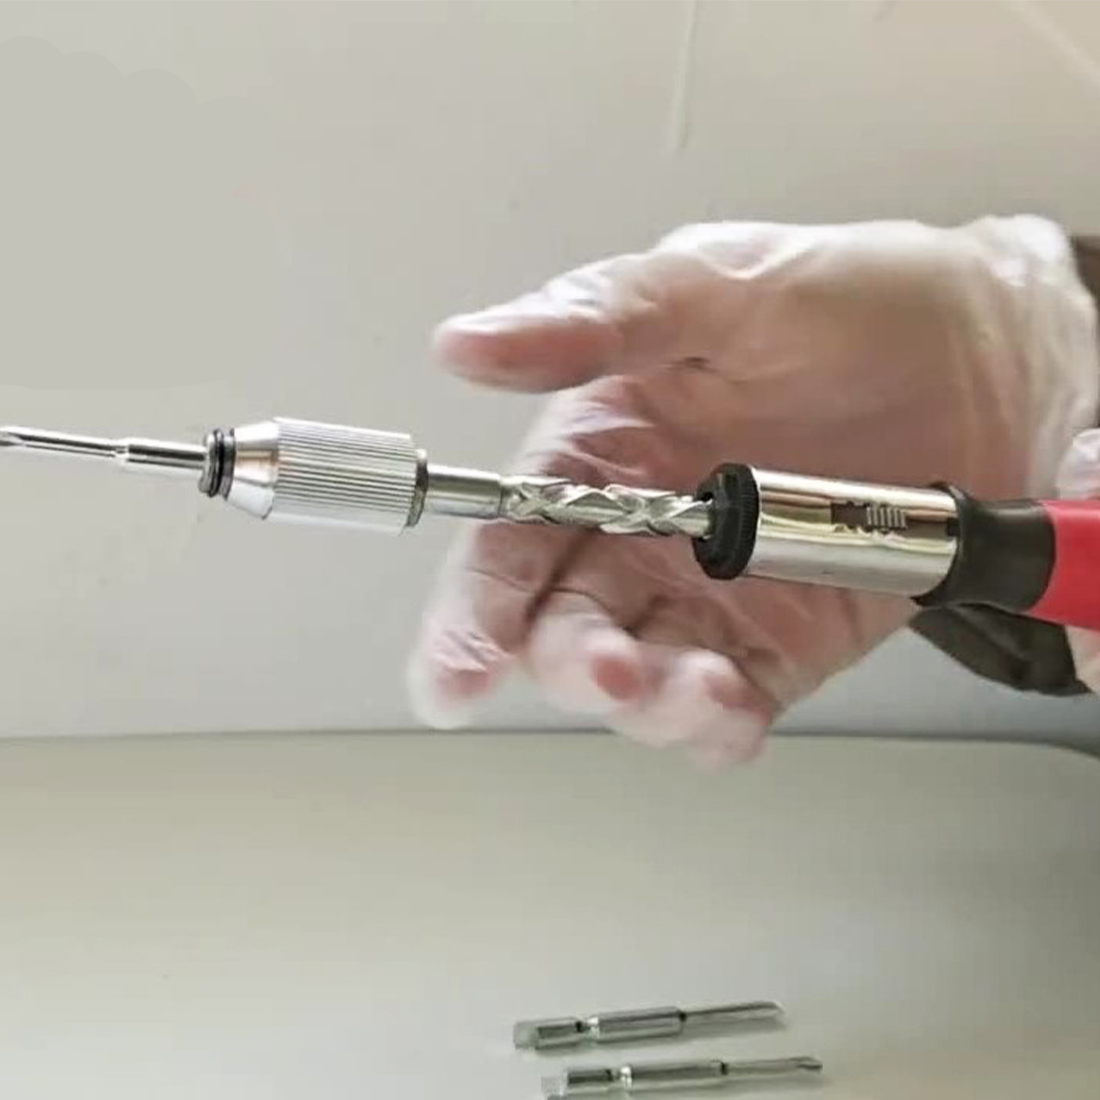 Semi-automatic screwdriver